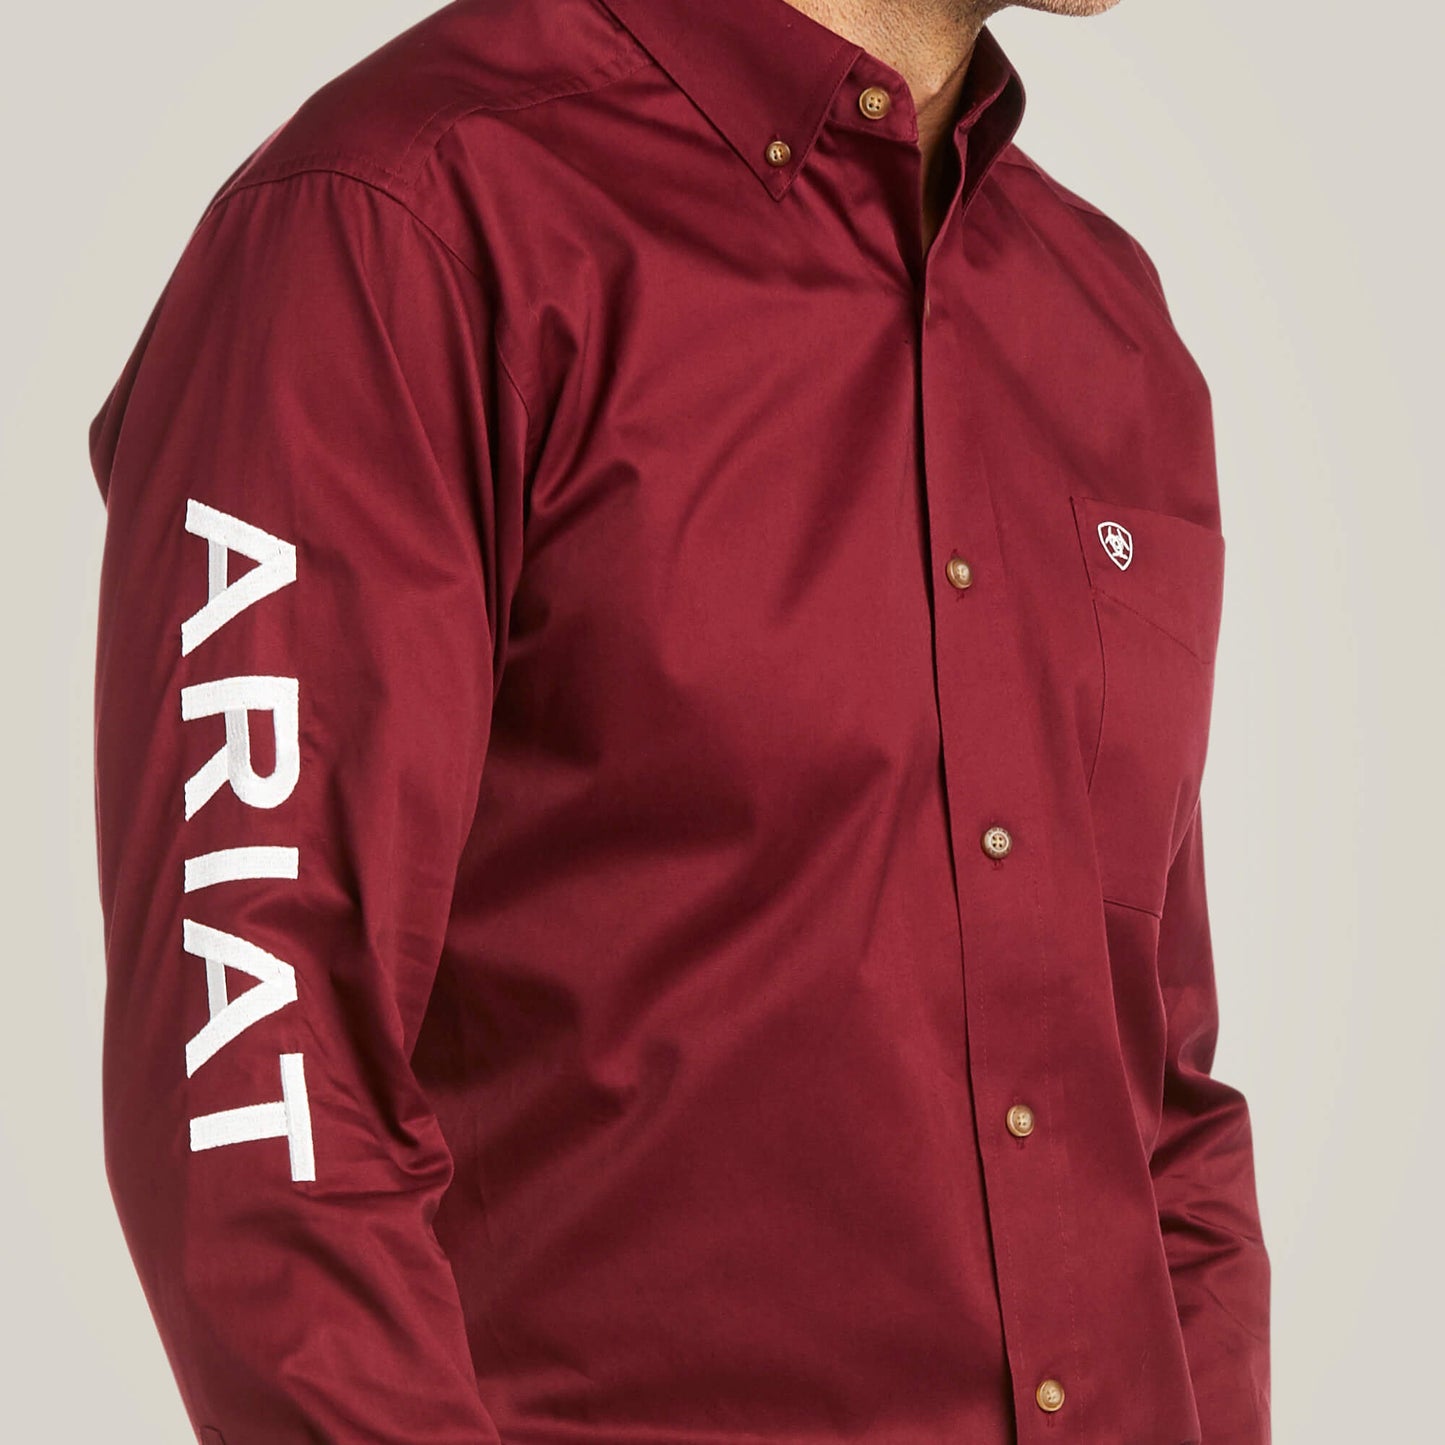 Ariat Team logo Twill Fitted Shirt Burgundy